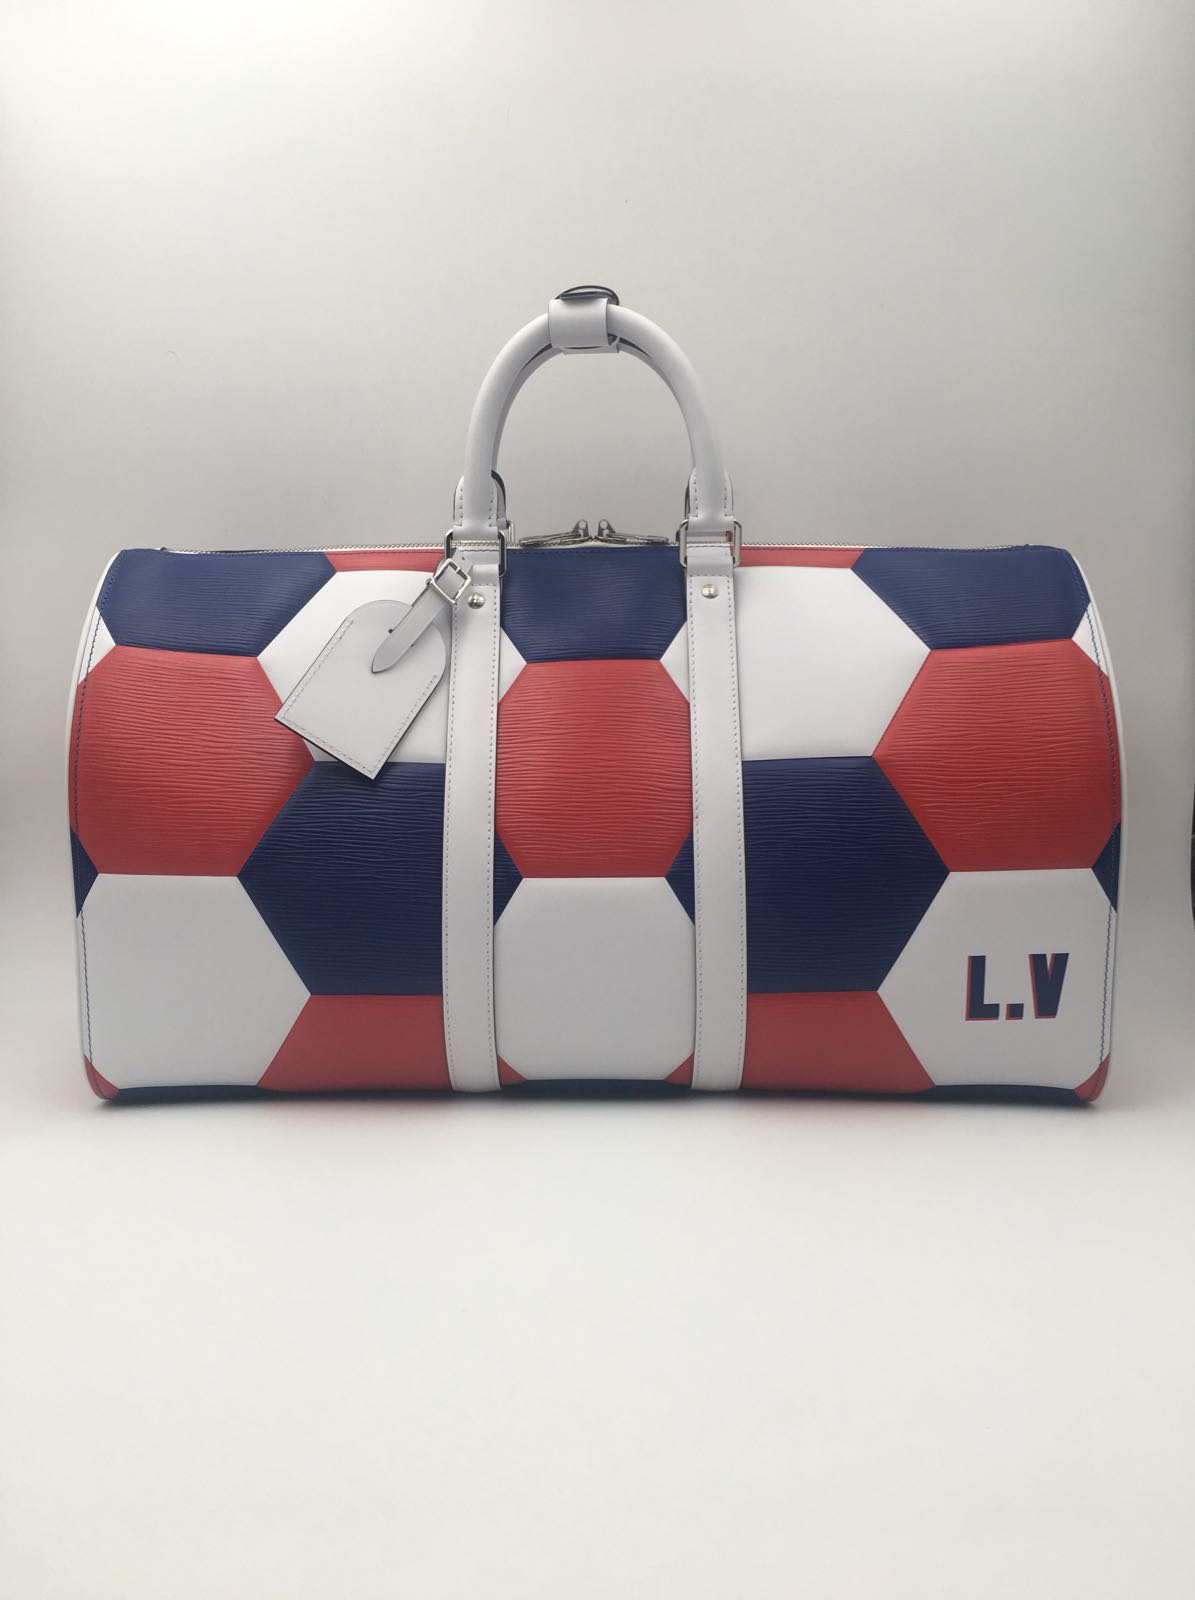 Louis Vuitton America's Cup Garment Keepall bag No Shoulder Strap 2G270020n